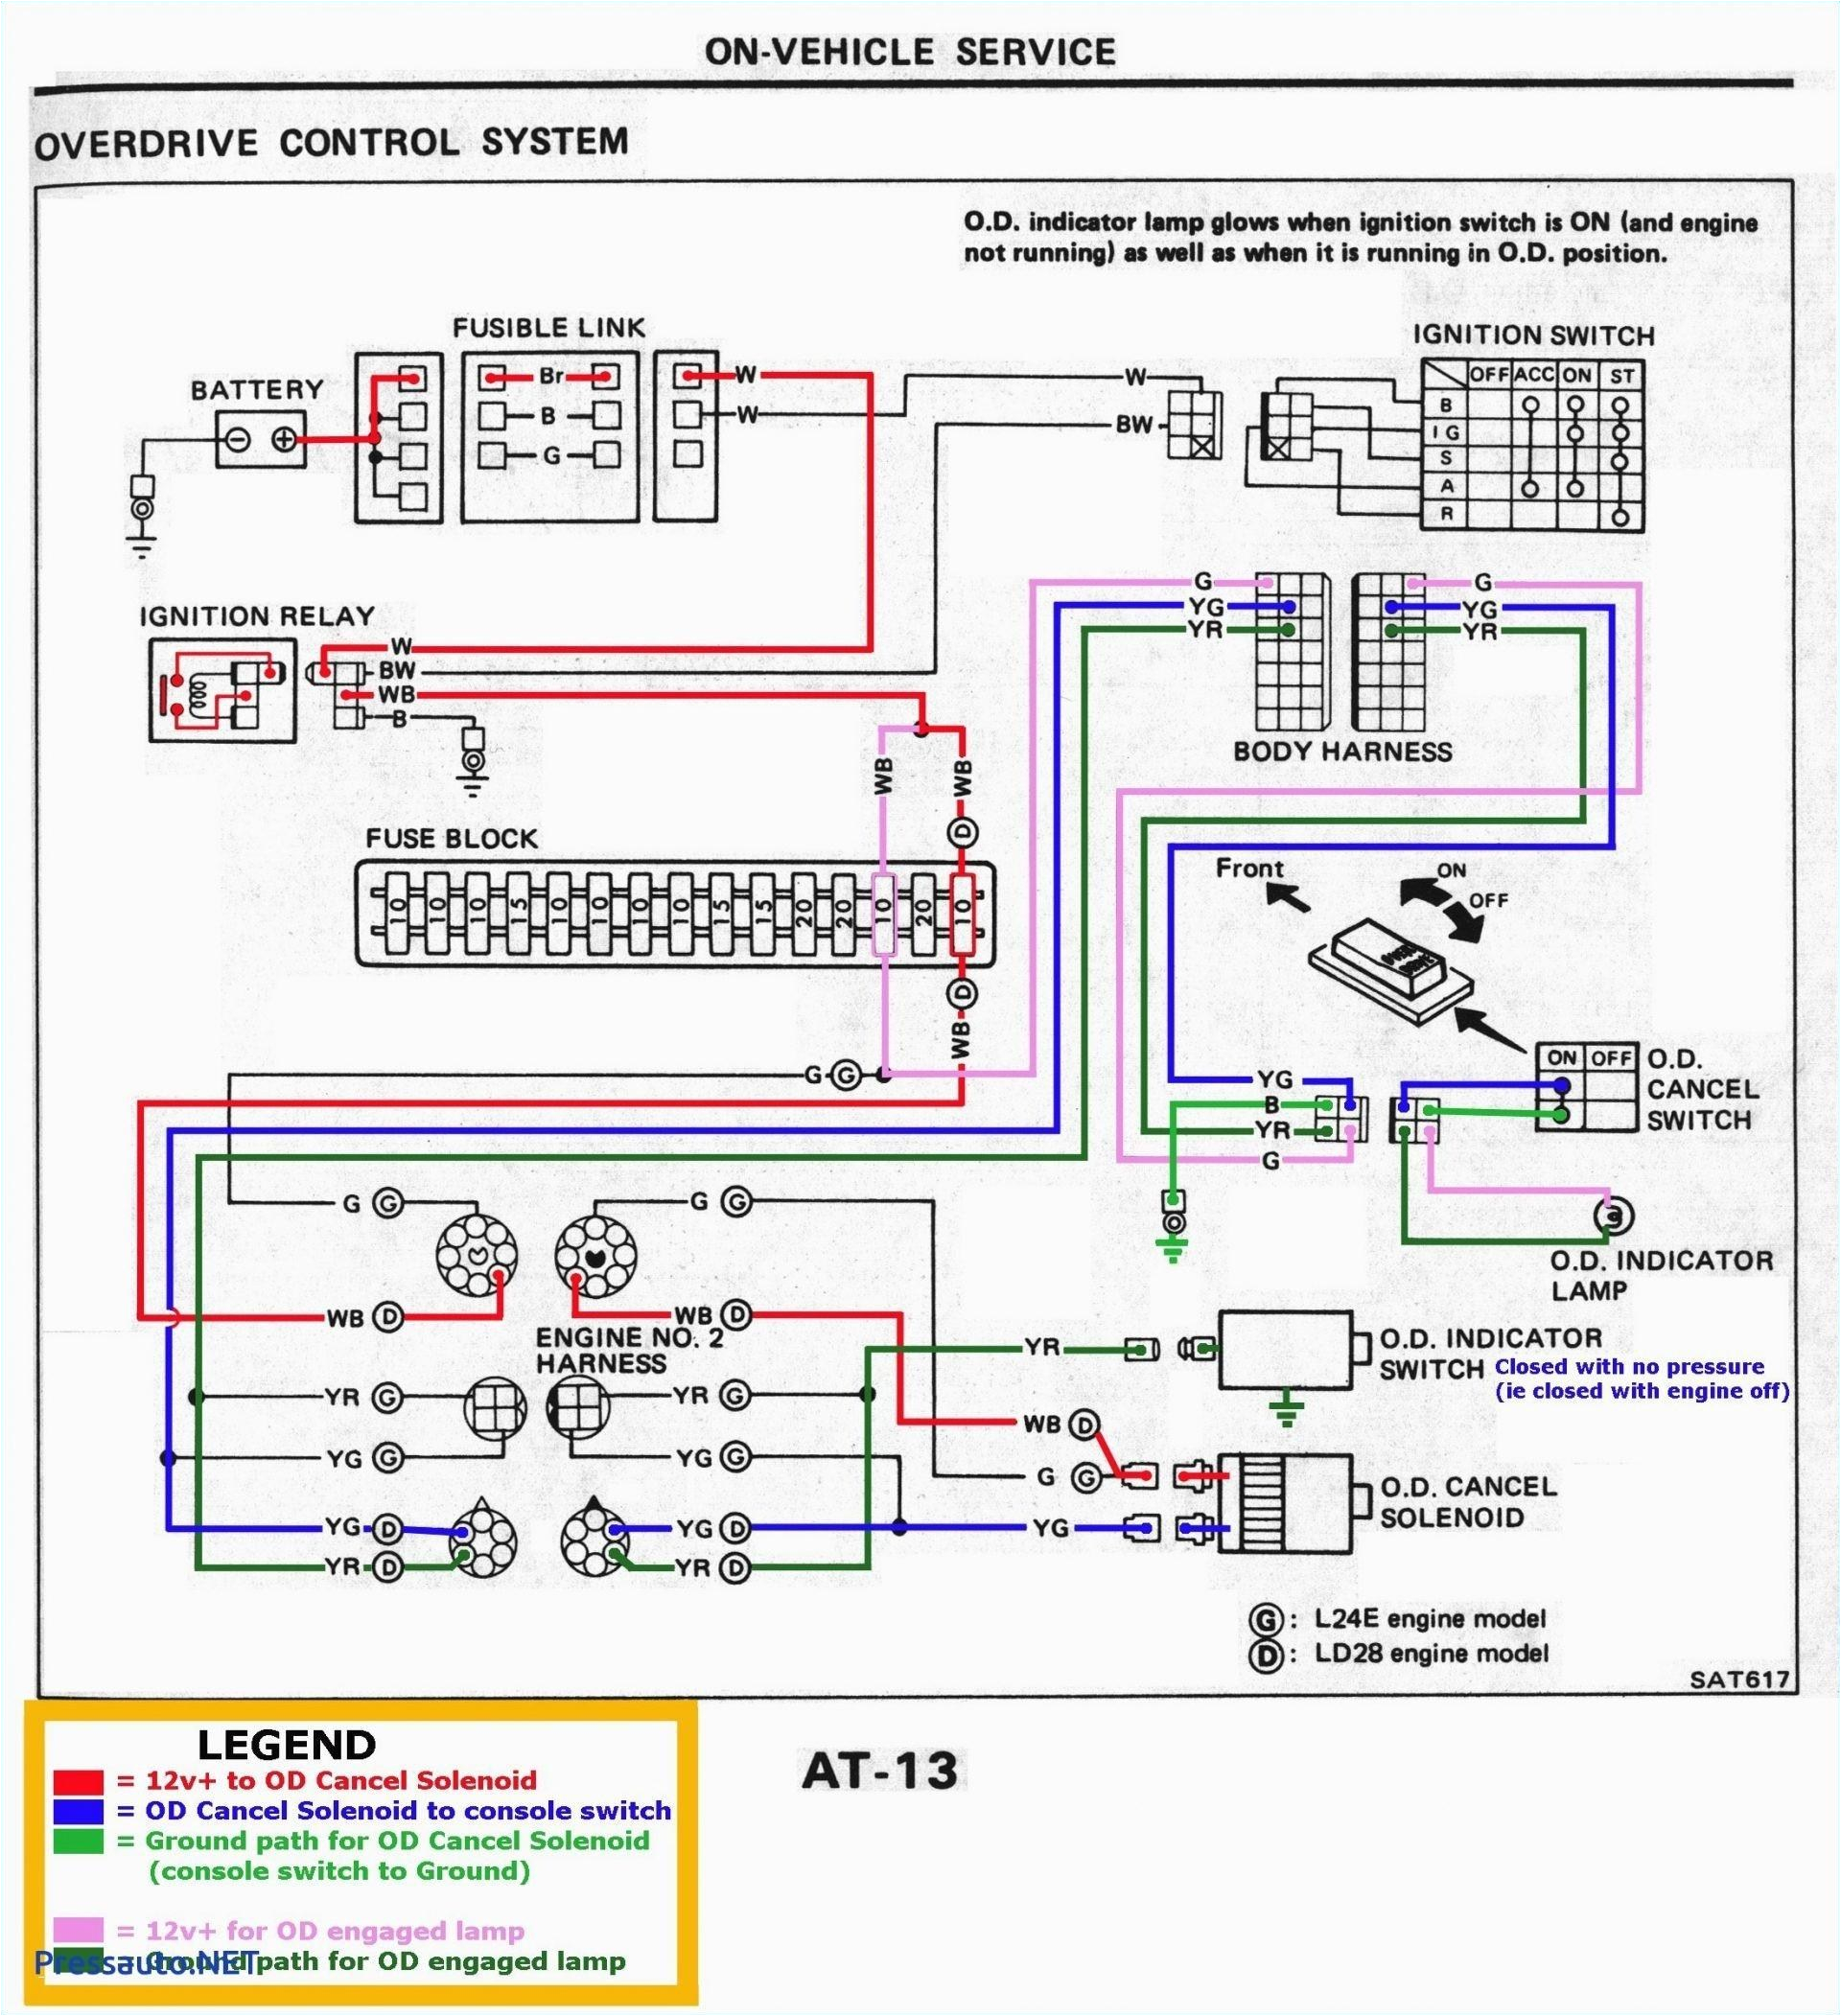 sundowner horse trailer wiring diagram wiring diagram schematic sundowner wiring diagram sundowner wiring diagram